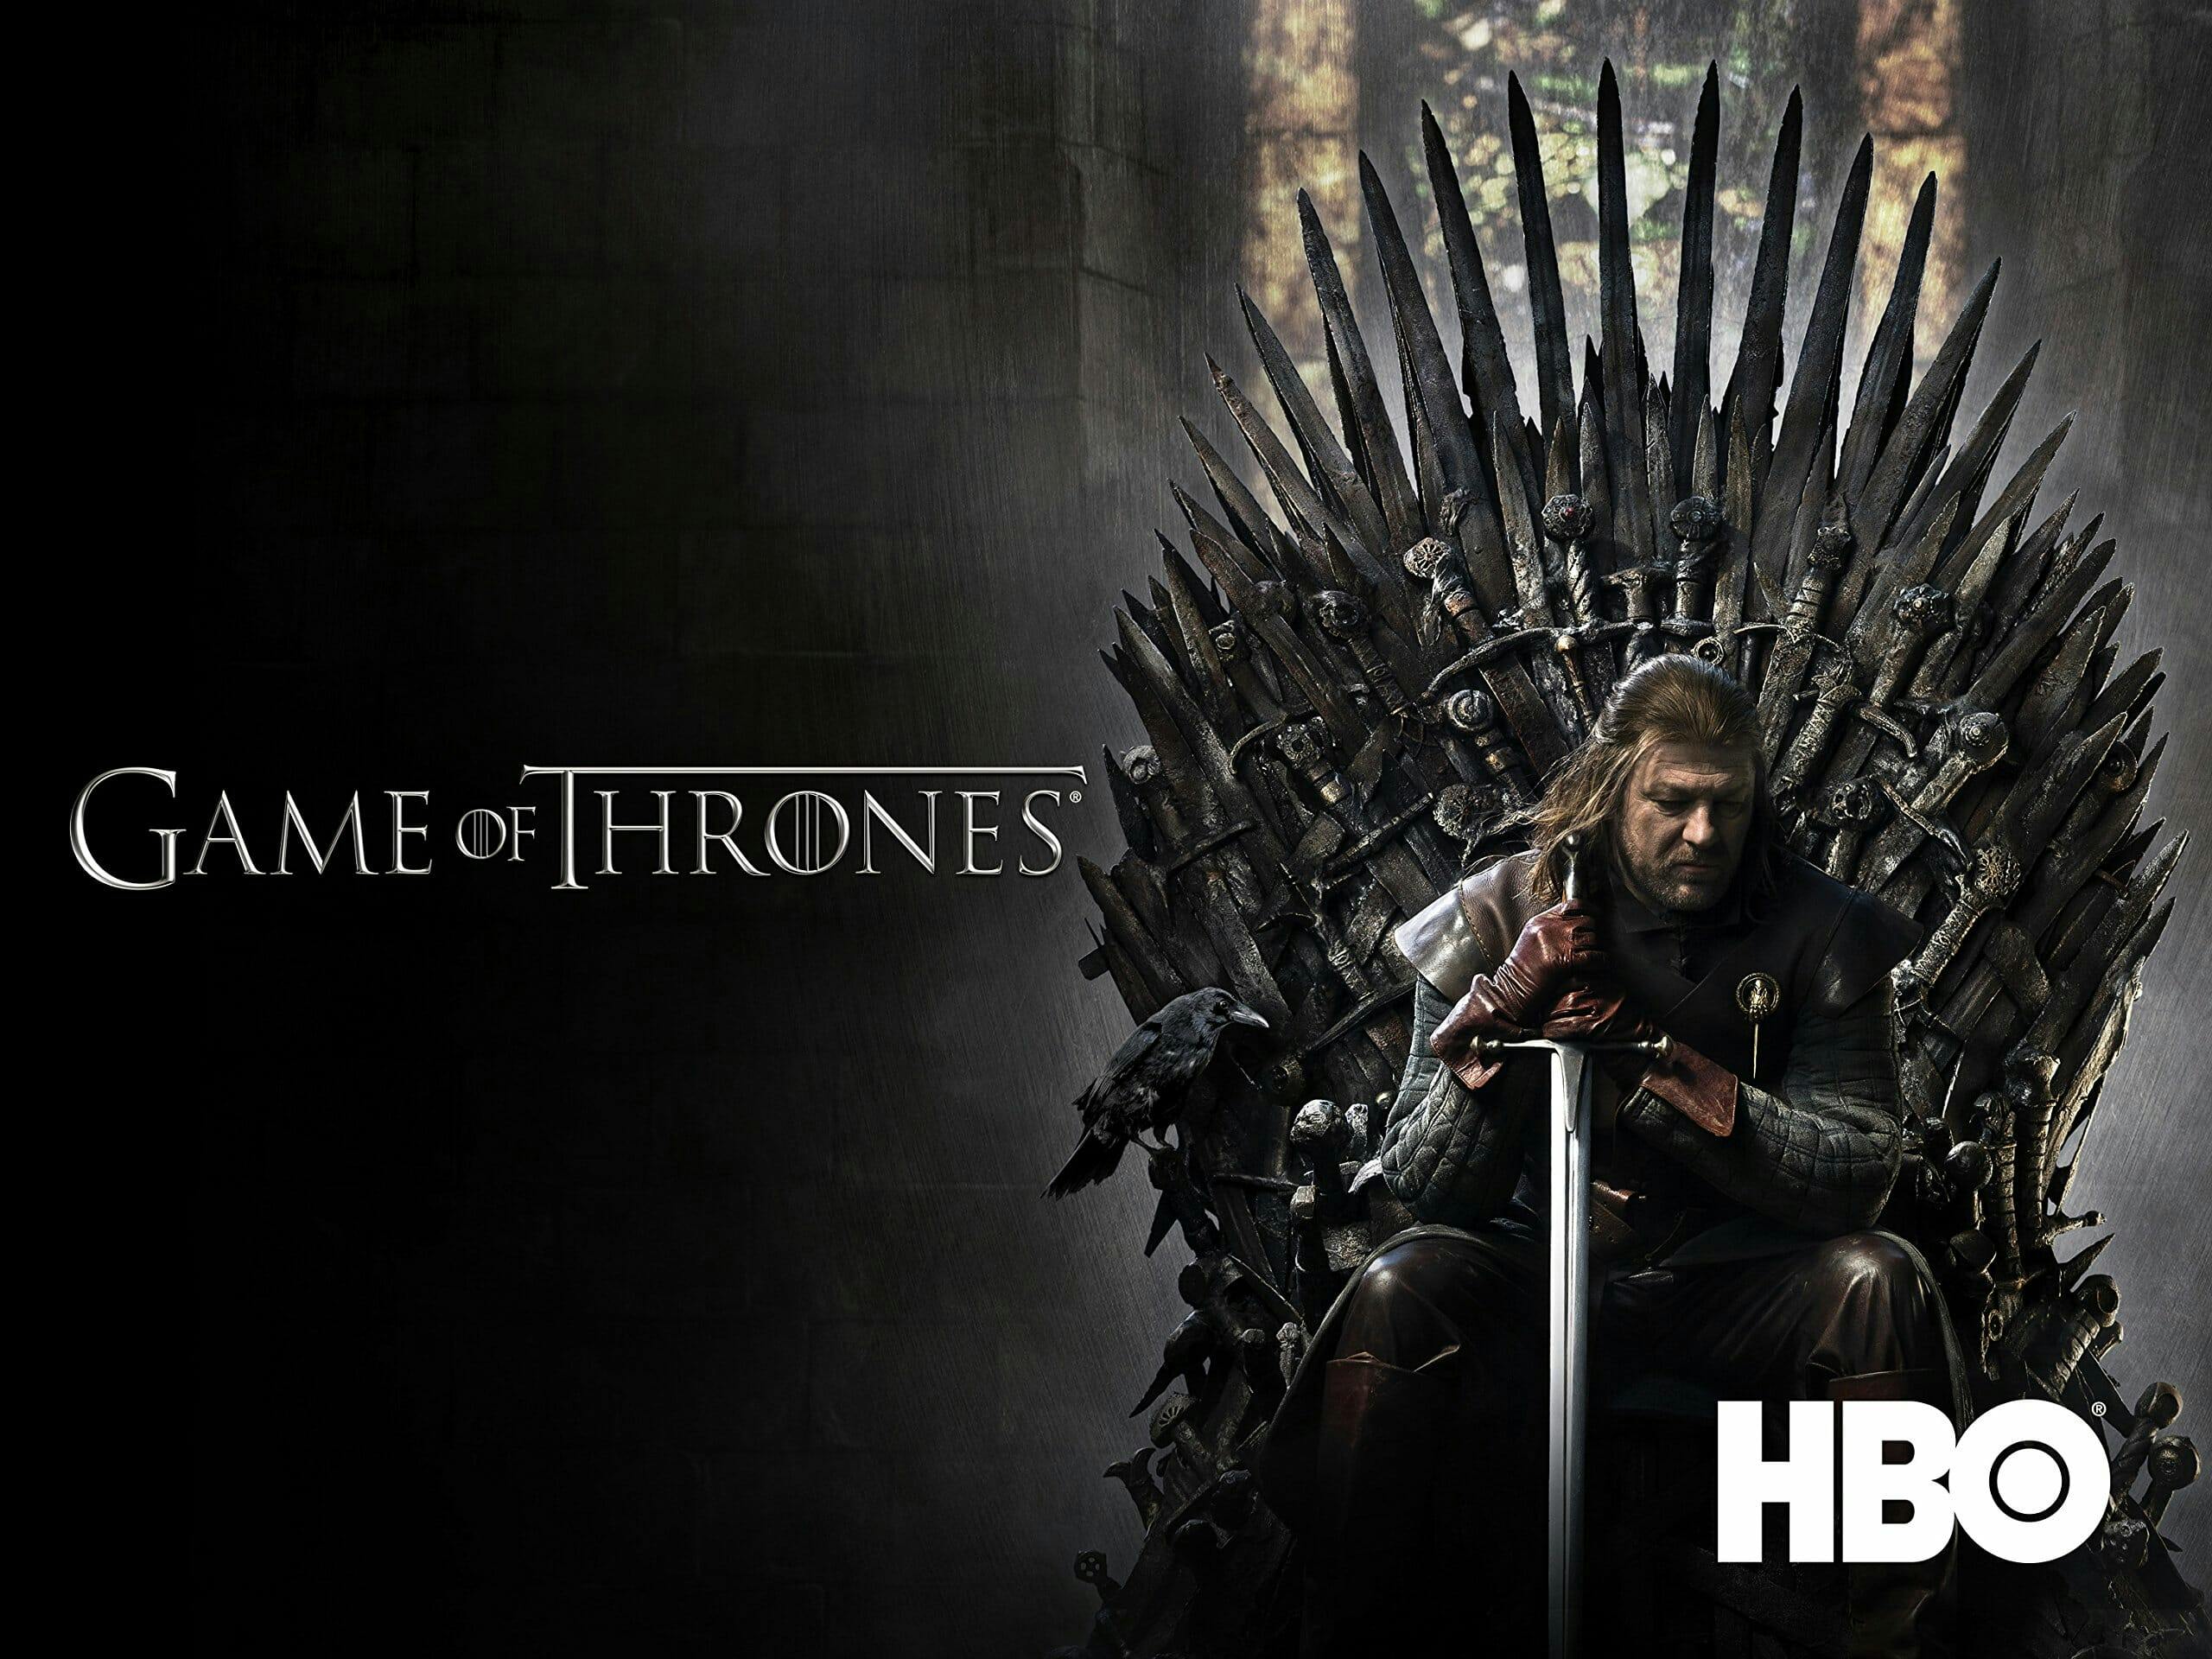 watch game of thrones season 8 episode 4 online free on Amazon